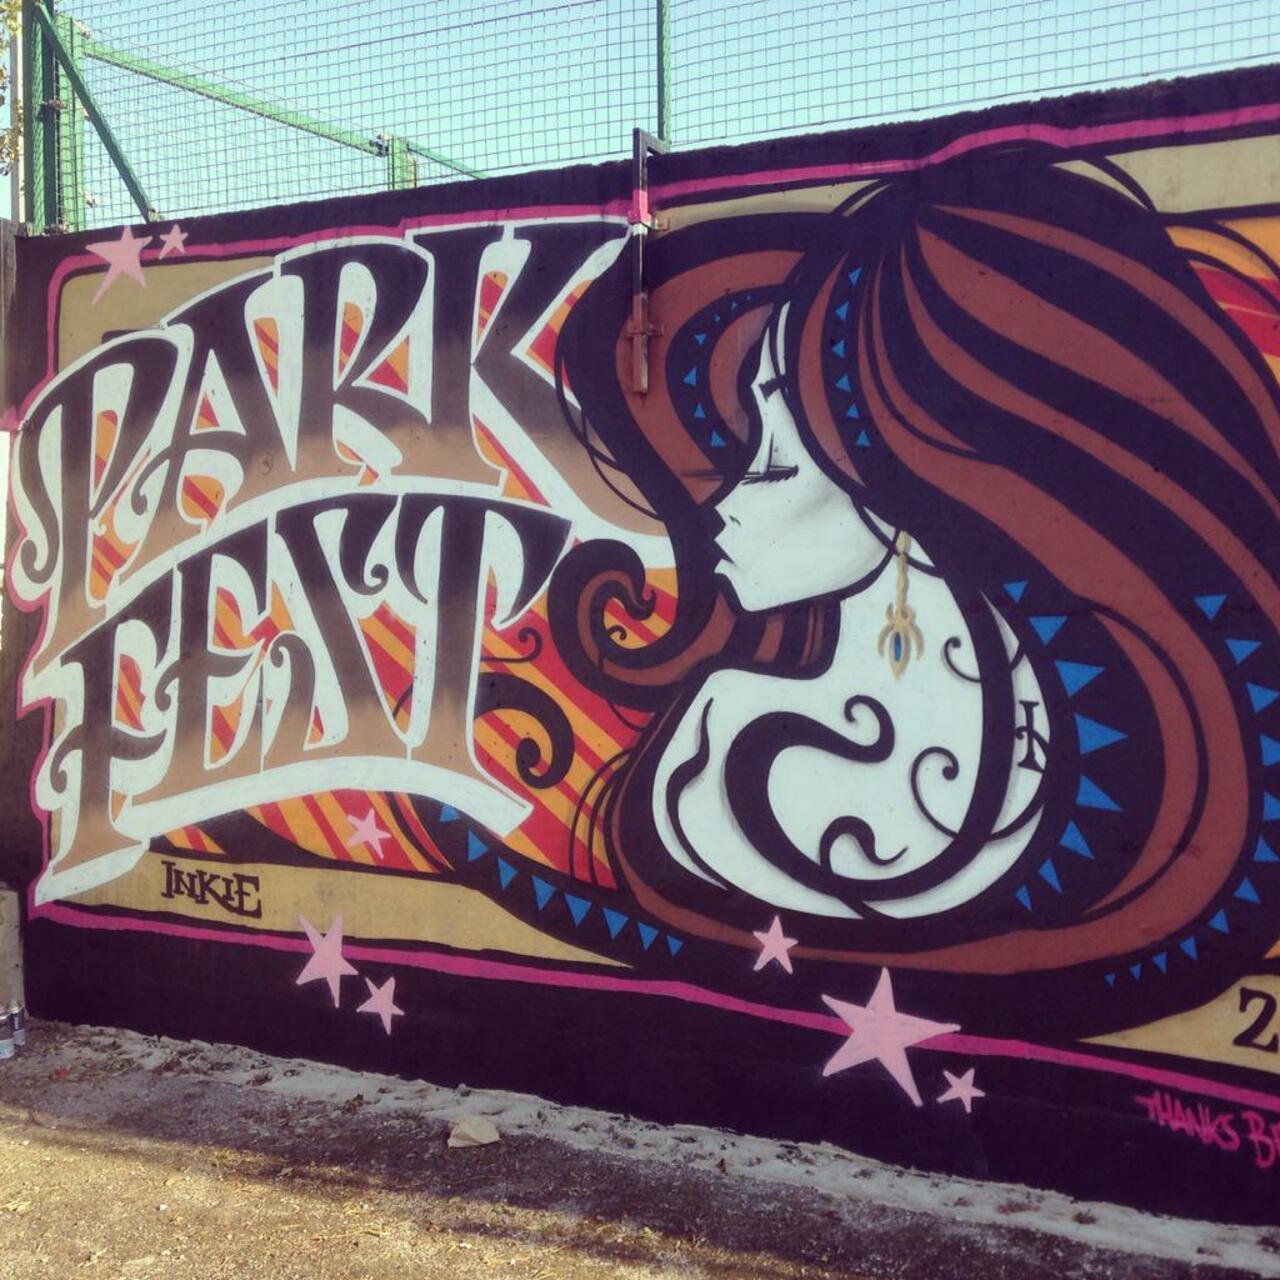 Early bird catches the worm #parkfest #Bristol #graffiti #streetart http://t.co/TZ2KoadXdU